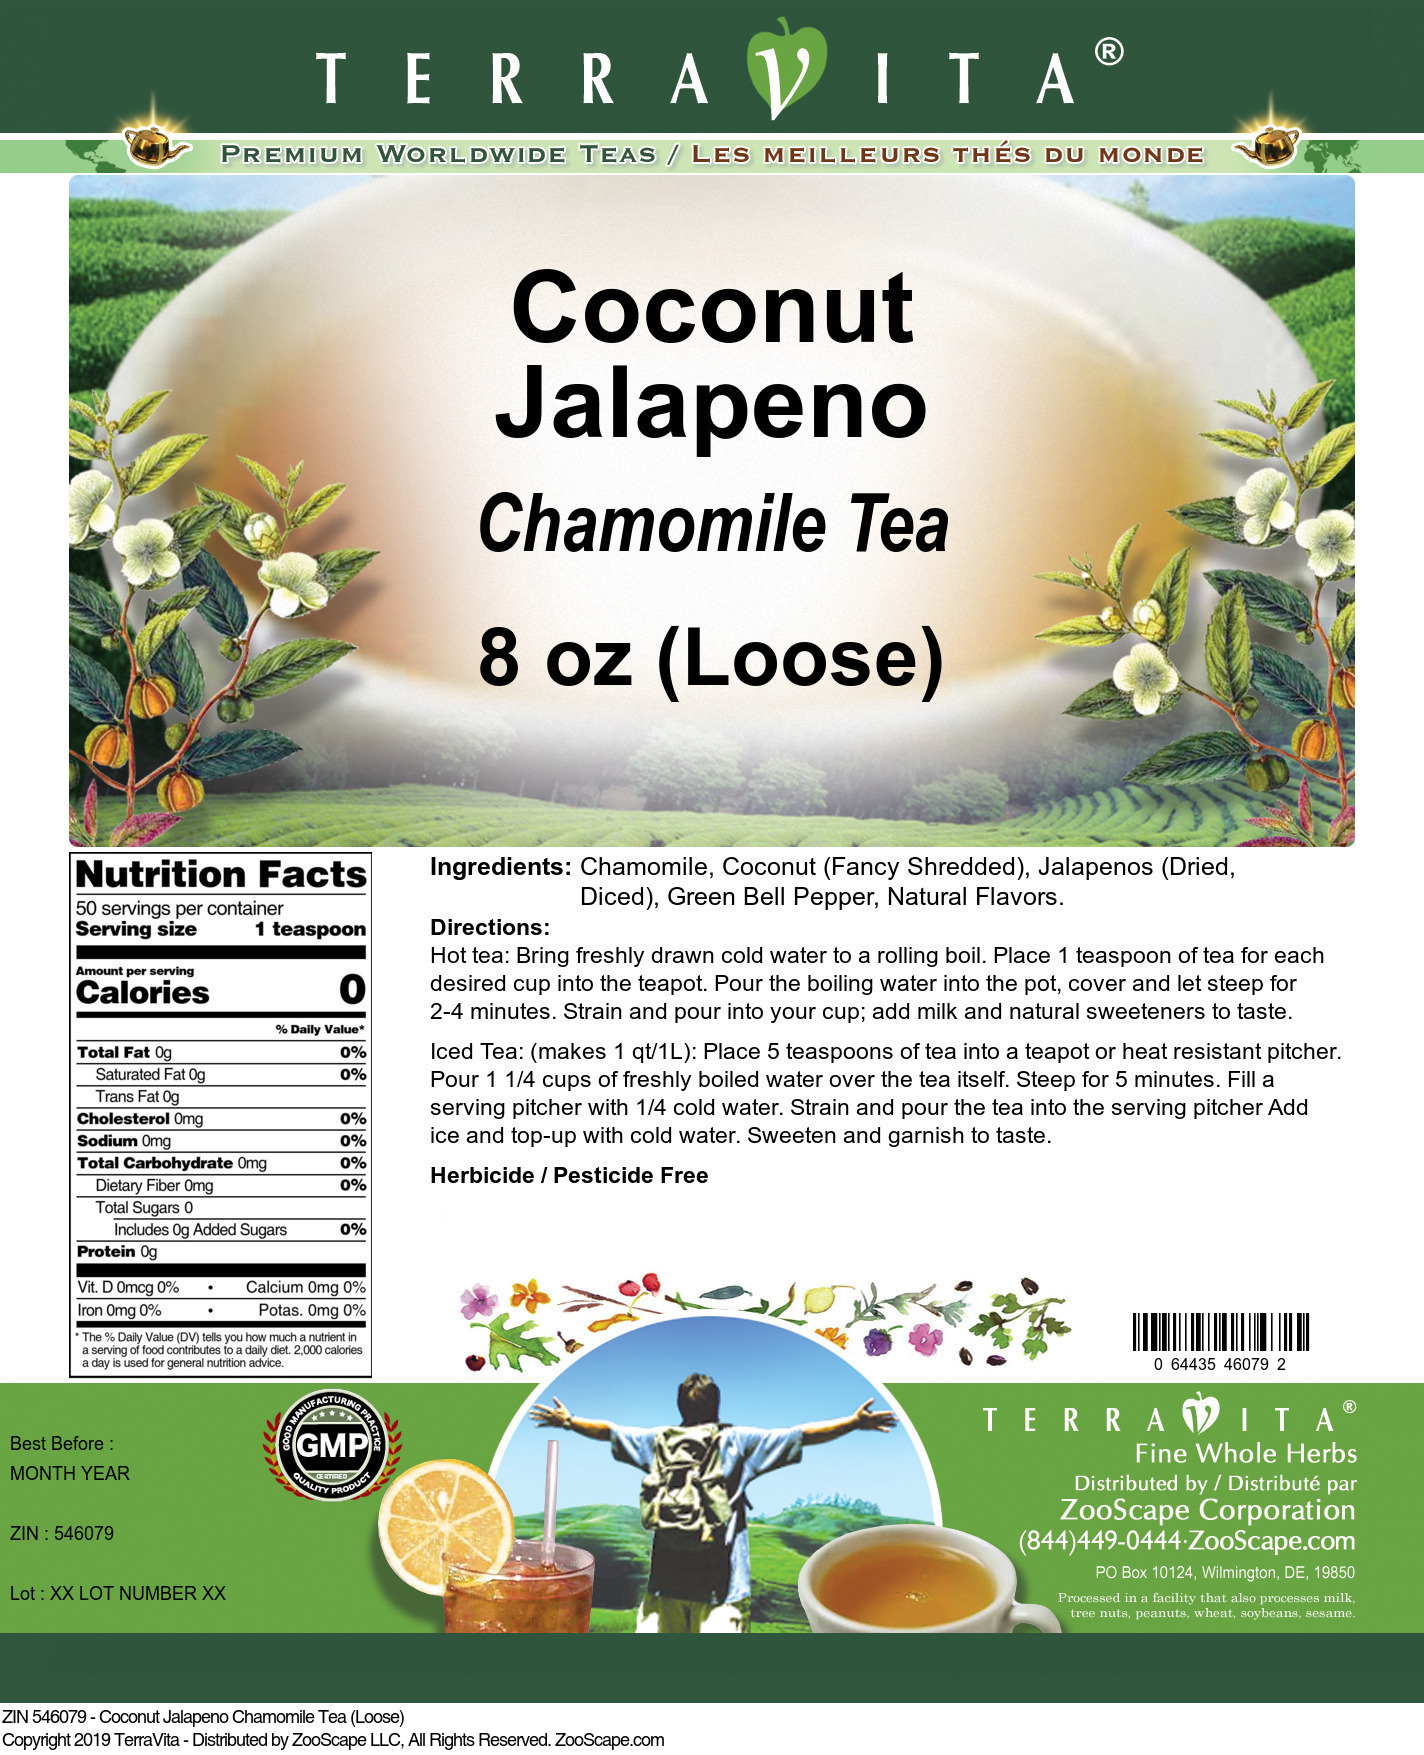 Coconut Jalapeno Chamomile Tea (Loose) - Label